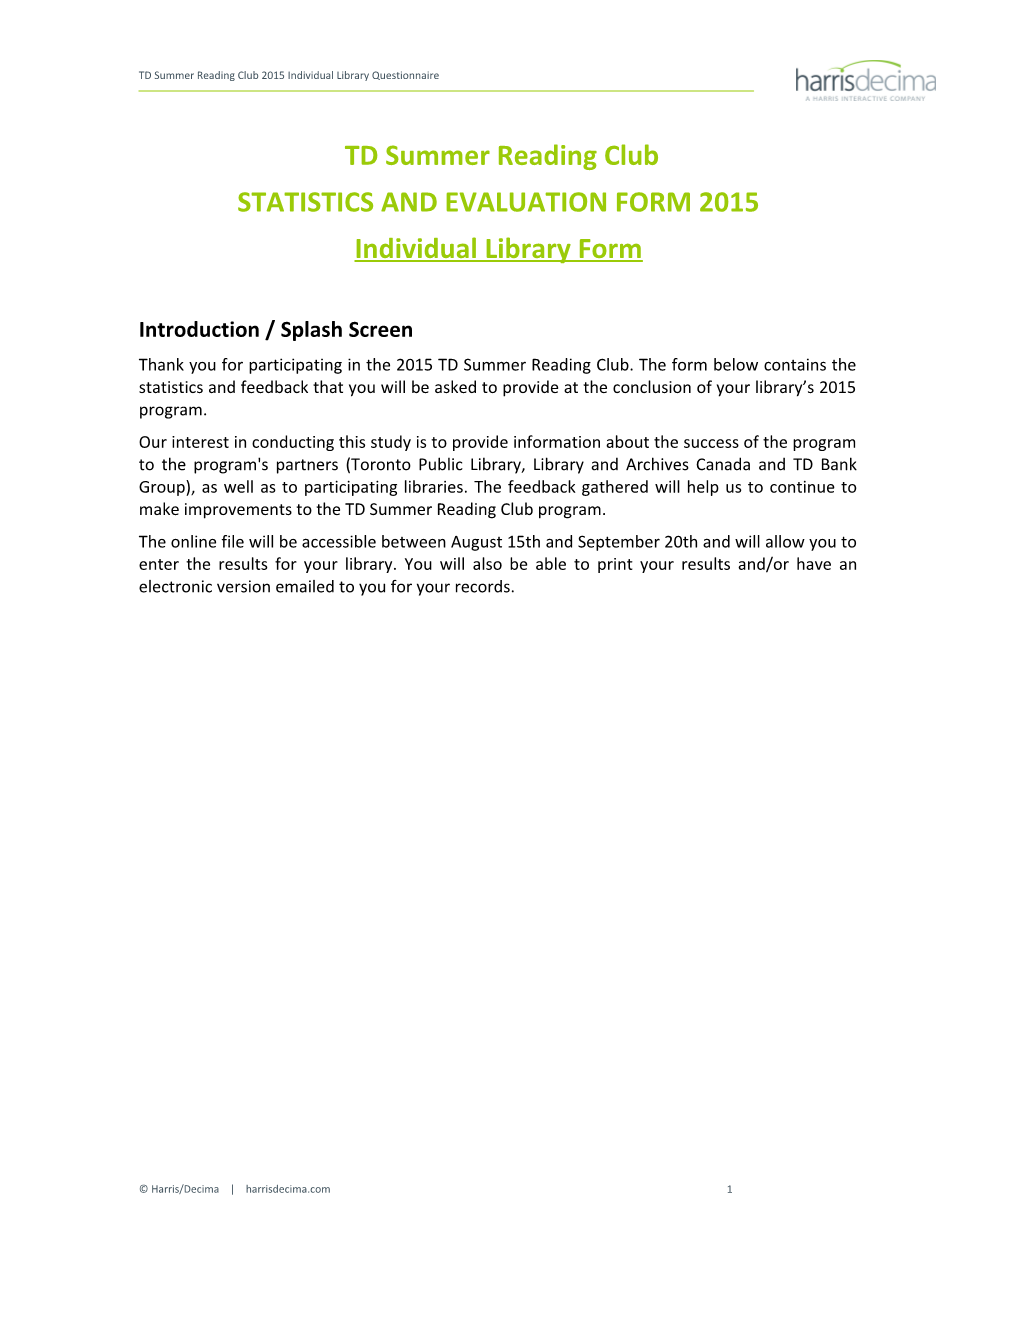 Statistics and Evaluation Form 2015